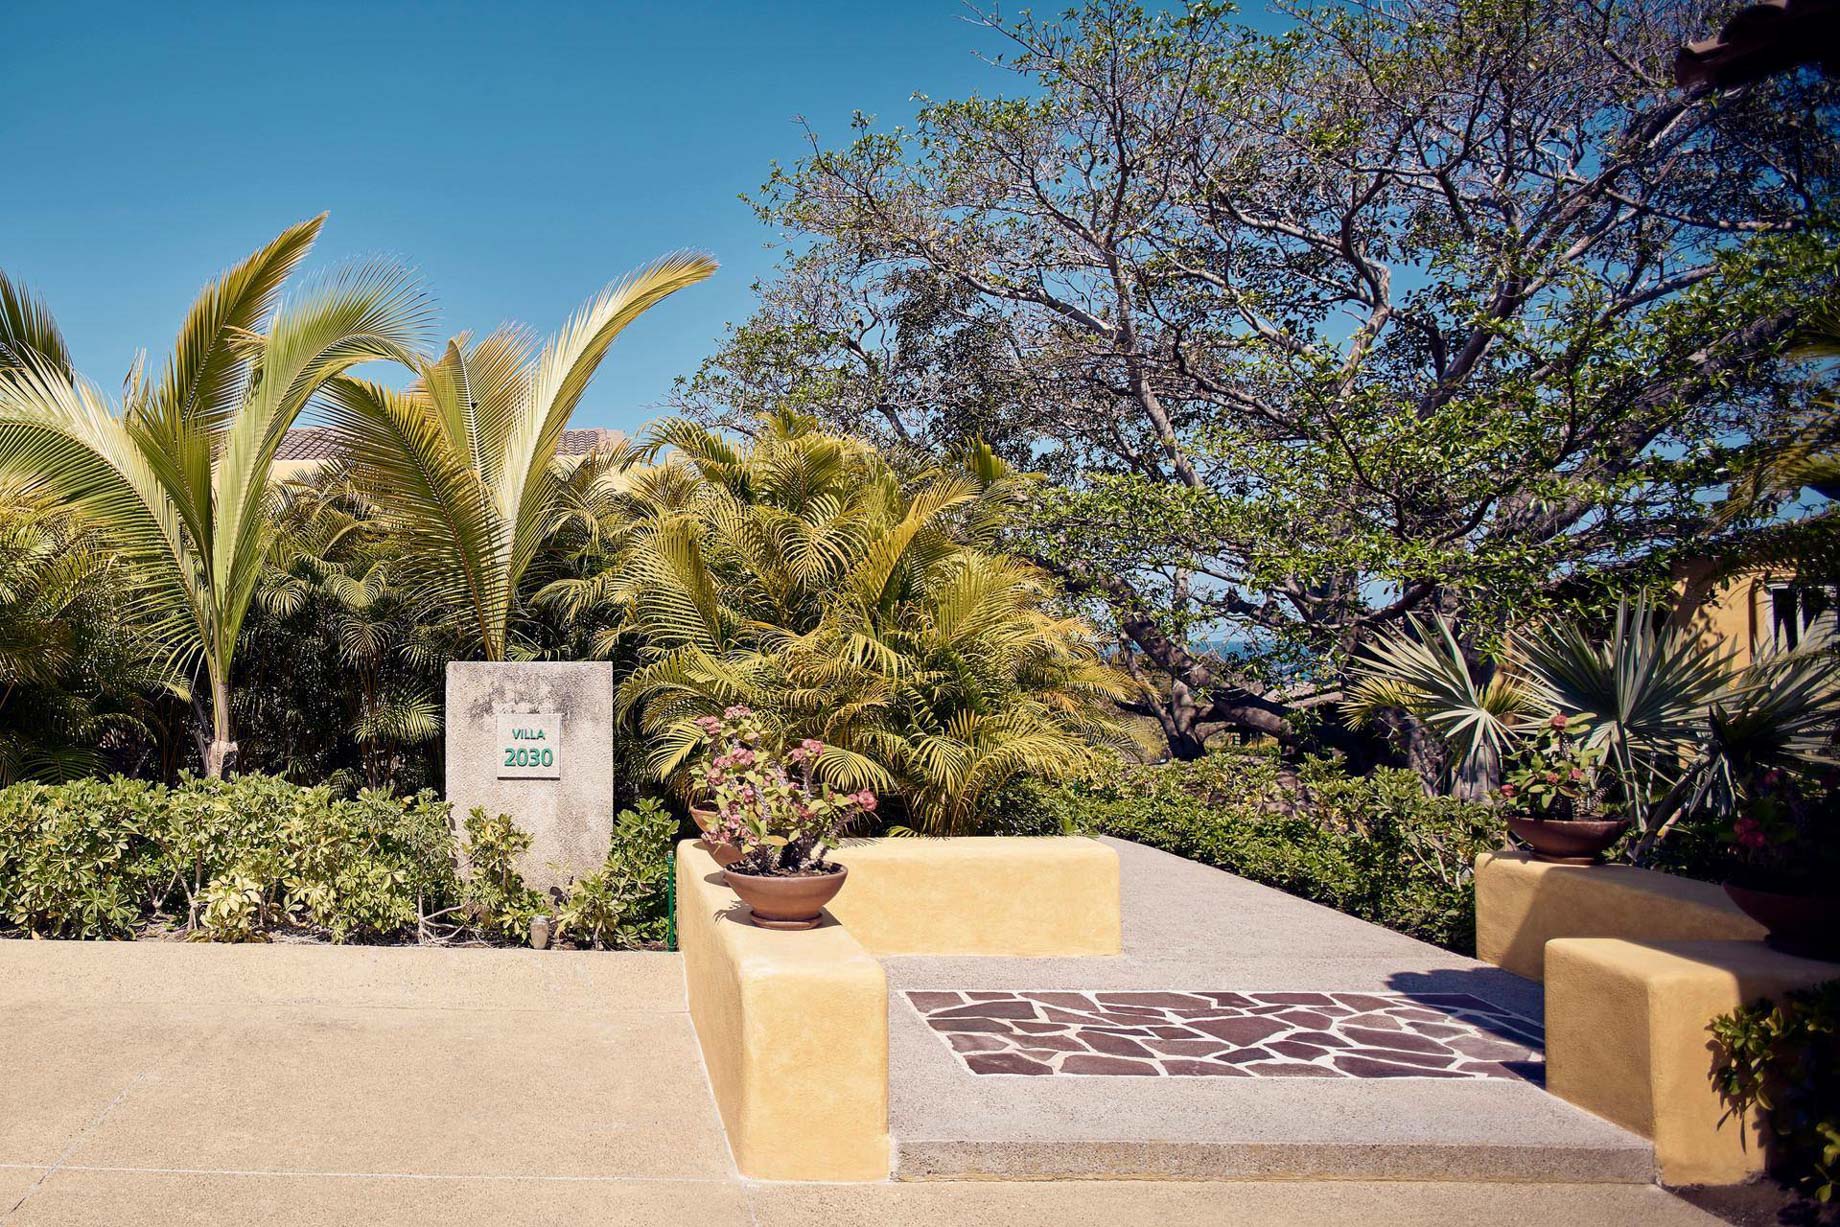 Four Seasons Resort Punta Mita - Nayarit, Mexico - Villa Exterior Entrance